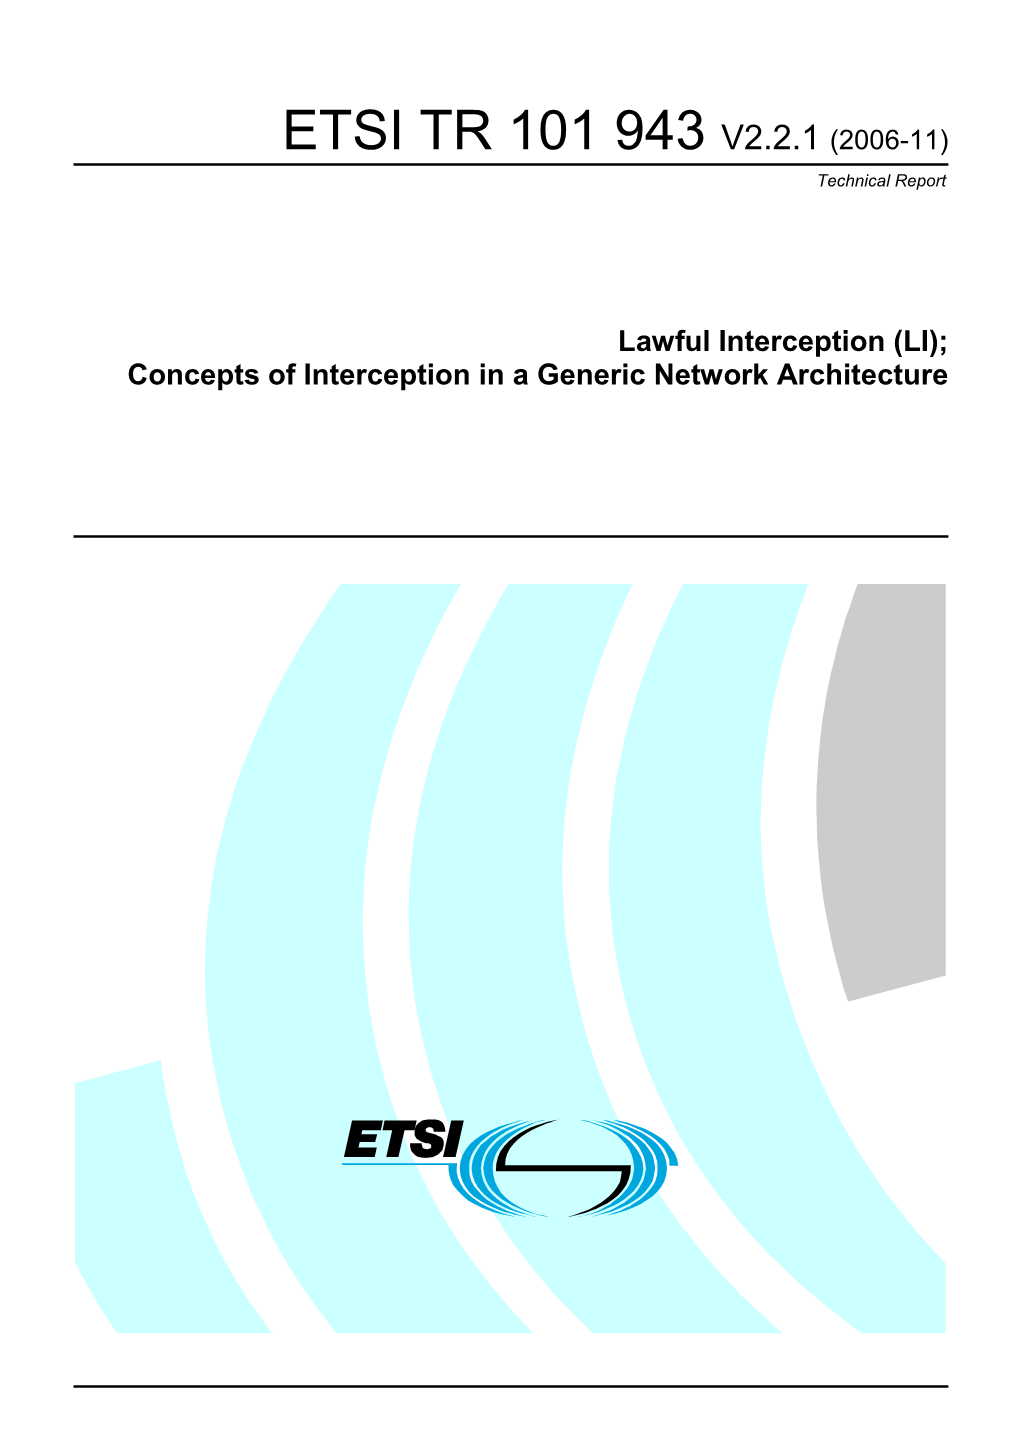 Lawful Interception (LI); Concepts of Interception in a Generic Network Architecture